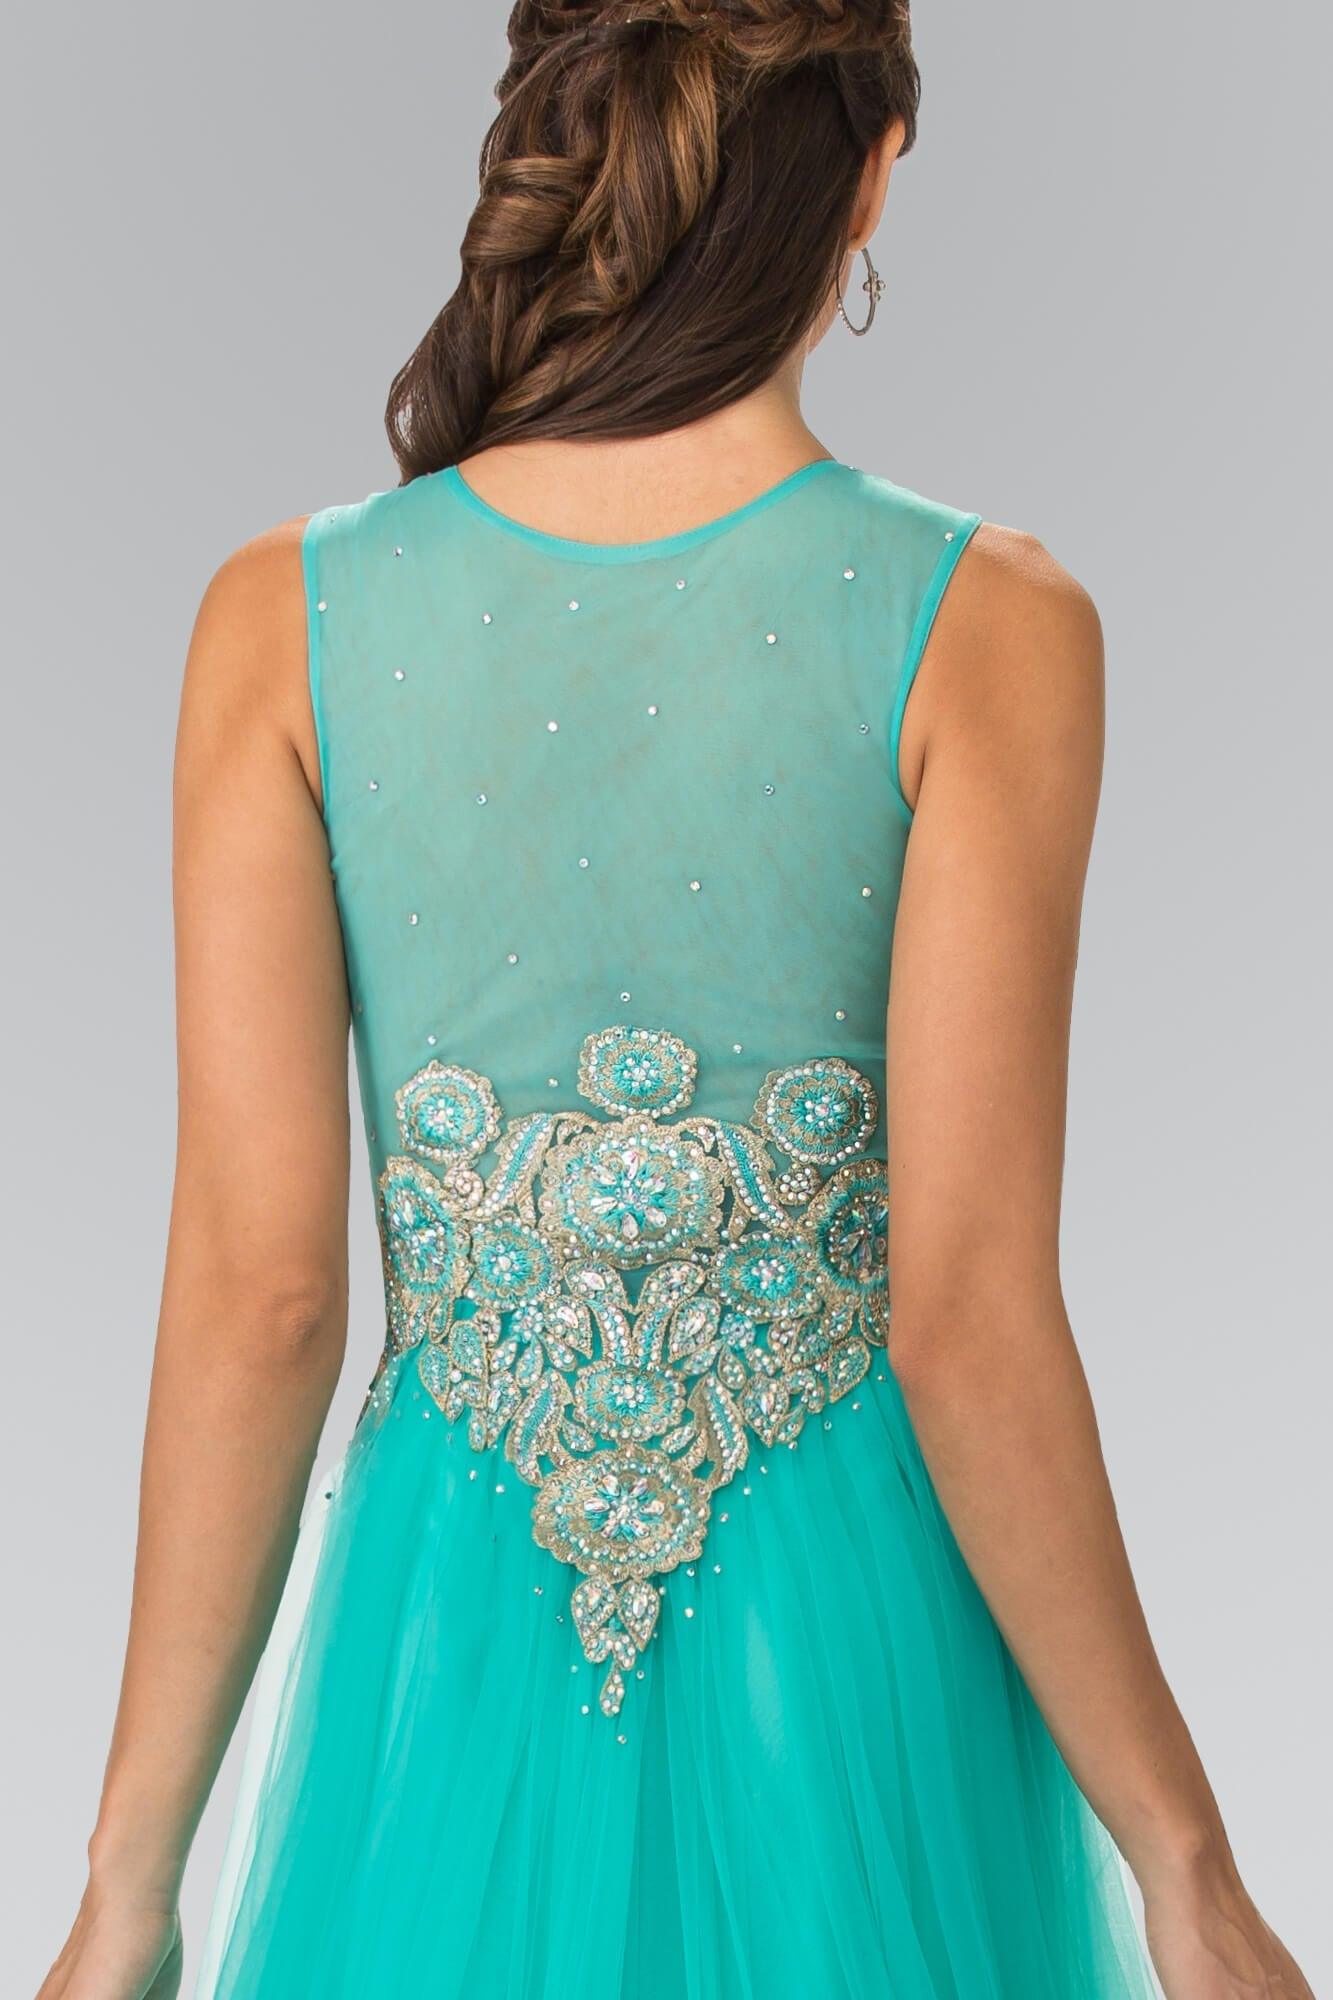 Prom Sleeveless Dress Formal Gown - The Dress Outlet Elizabeth K